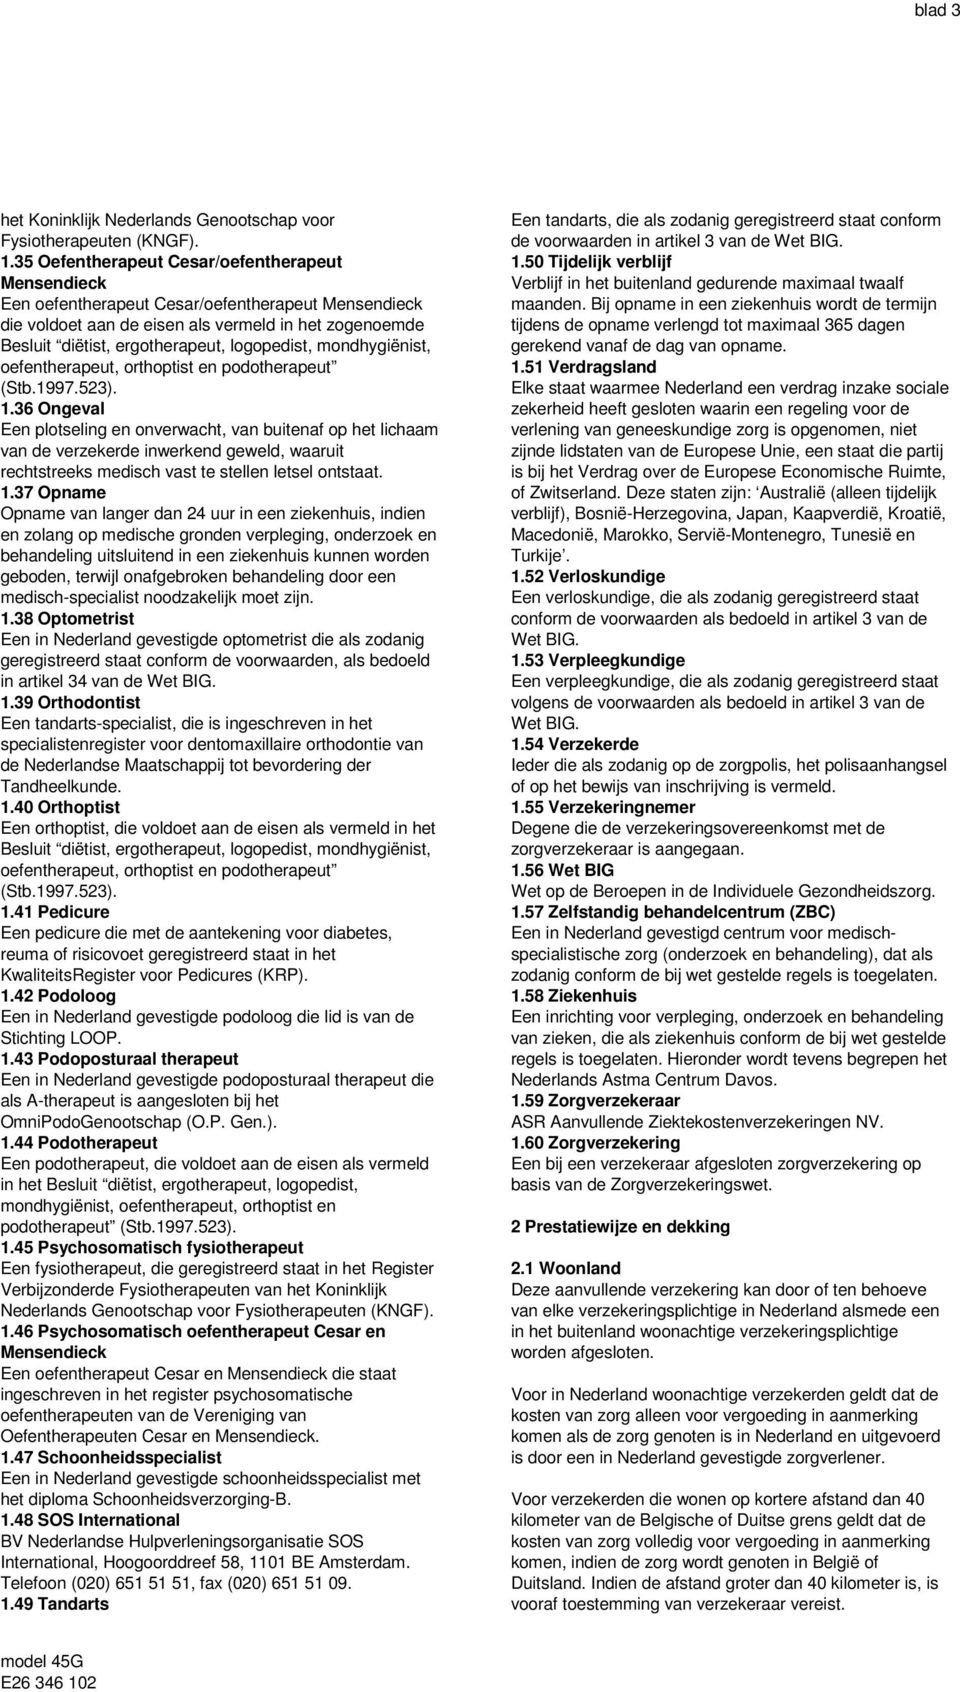 logopedist, mondhygiënist, oefentherapeut, orthoptist en podotherapeut (Stb.1997.523). 1.